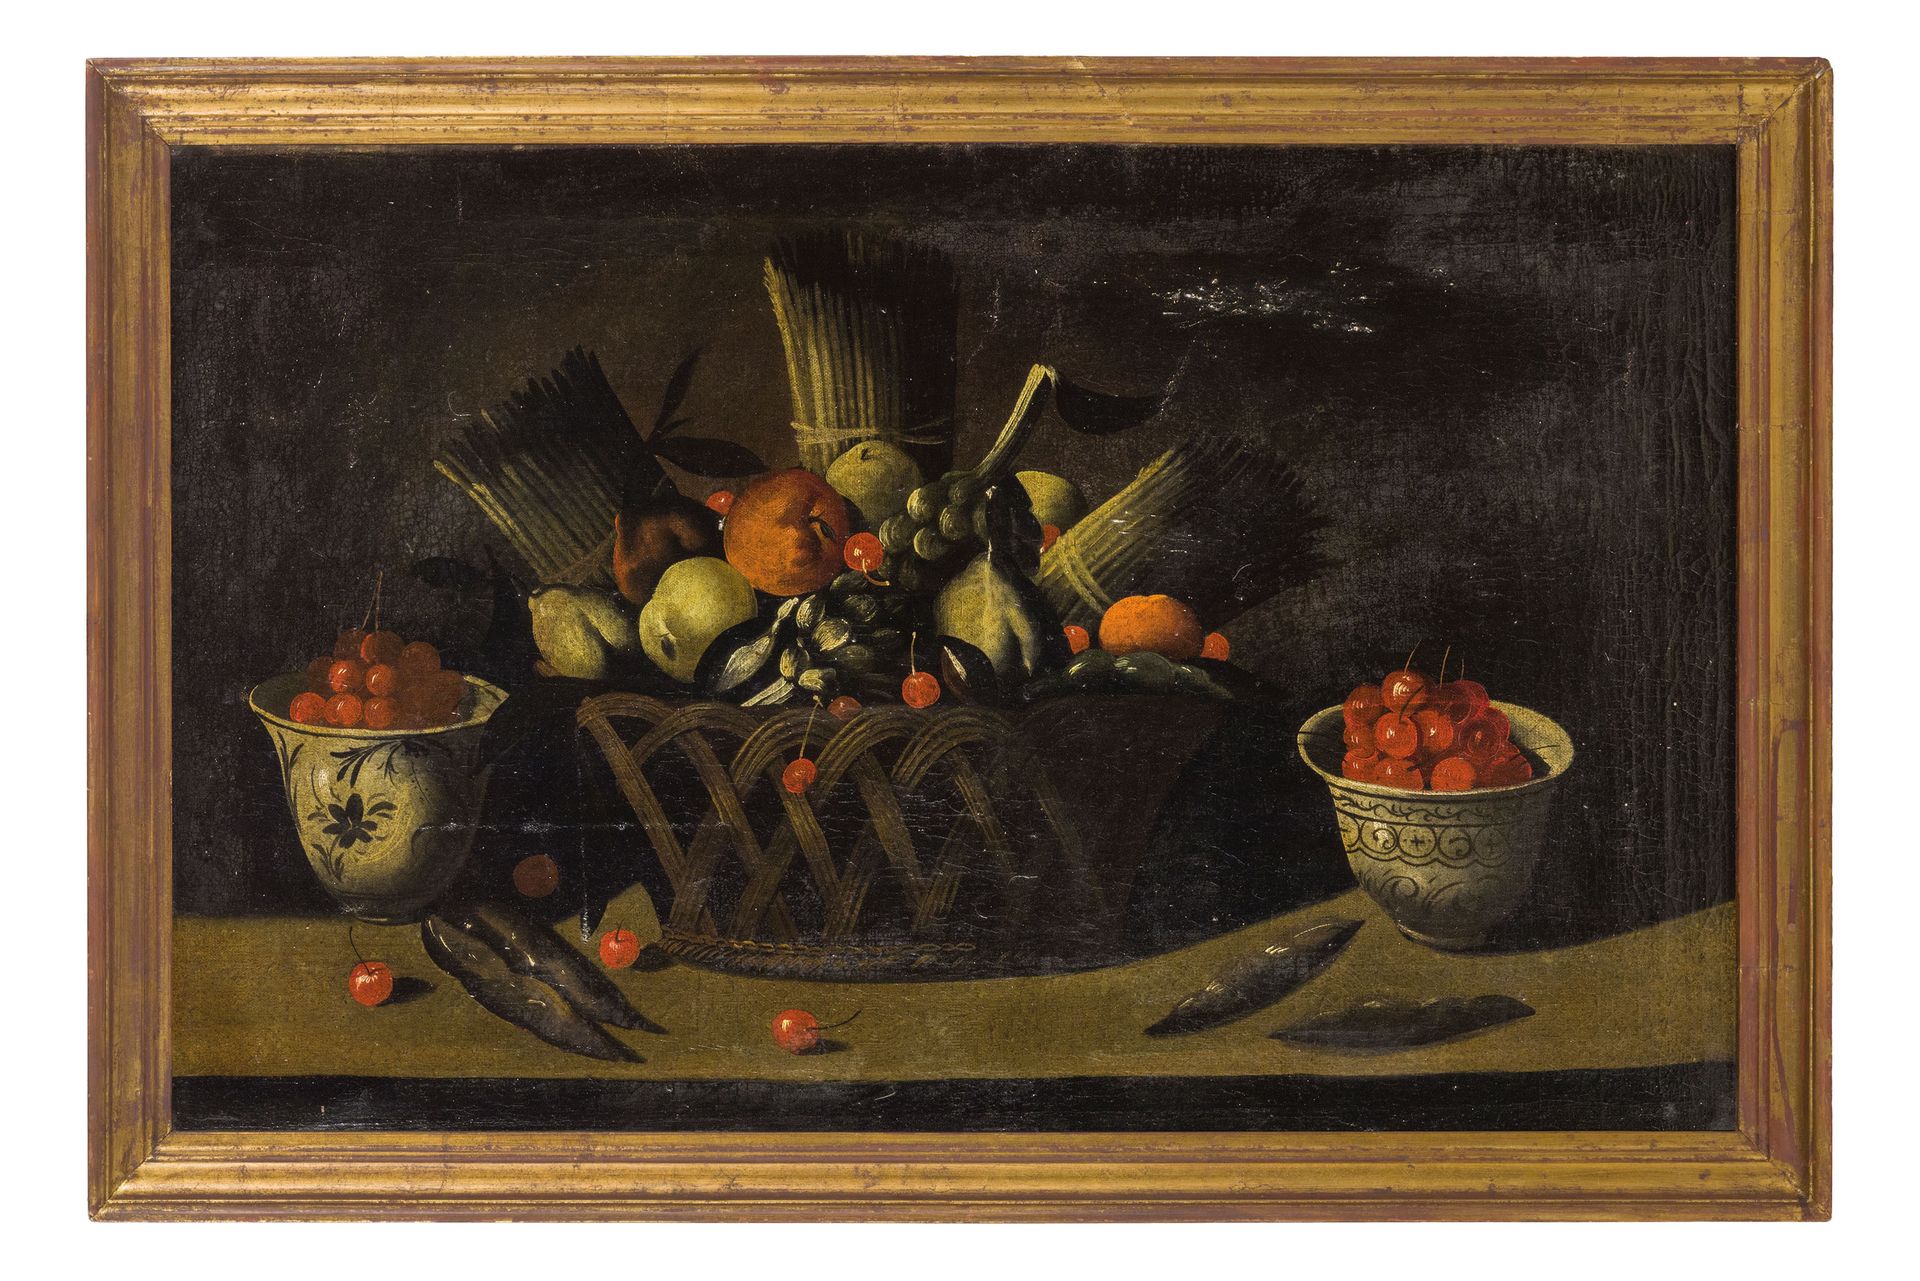 ANTONIO PONCE (maniera di) (Valladolid, 1608 - after 1662 ?)
Still life with veg&hellip;